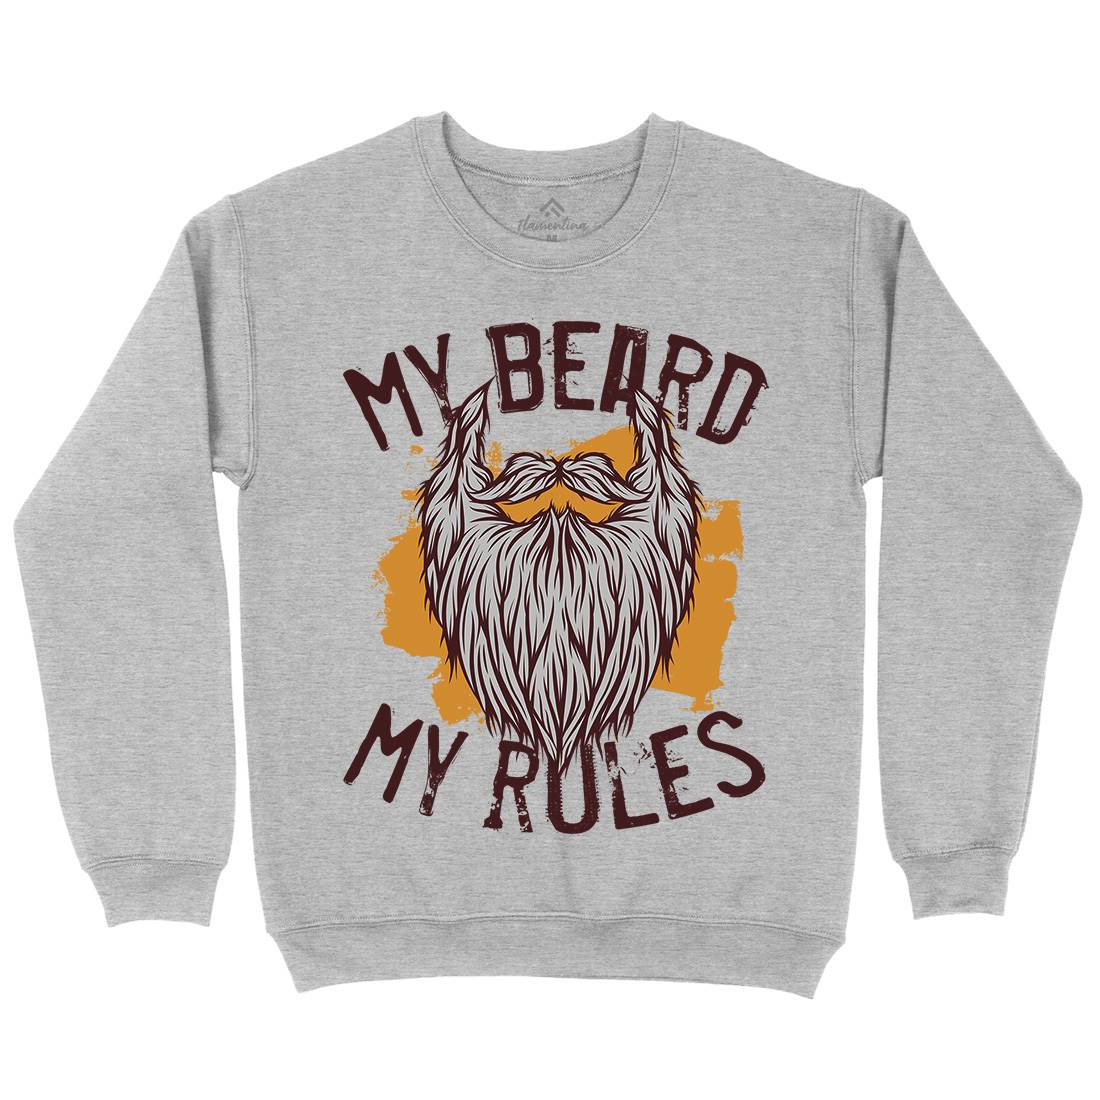 My Beard Rules Kids Crew Neck Sweatshirt Barber C808